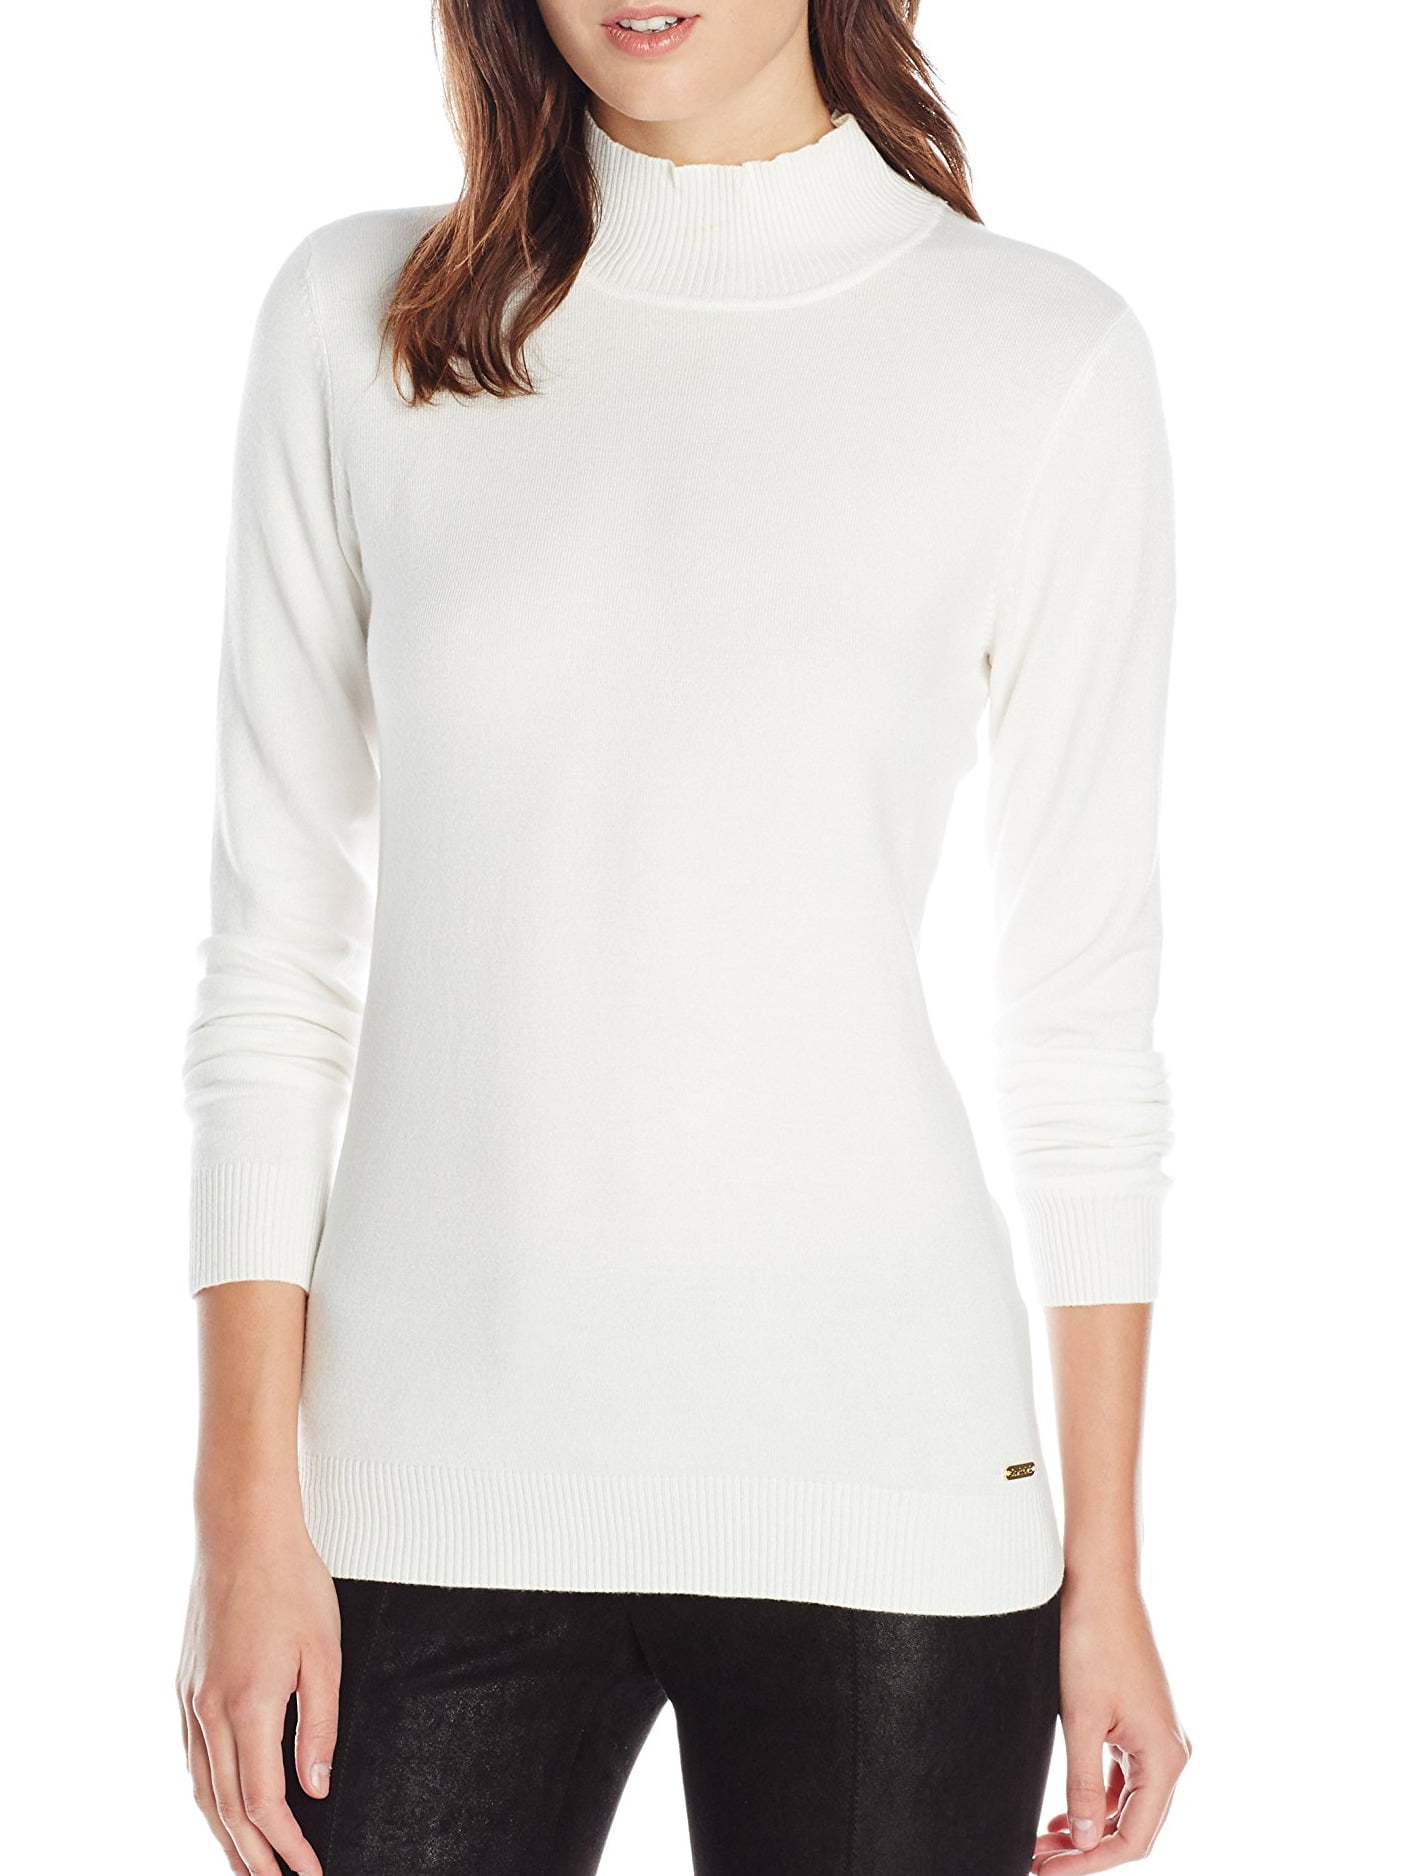 Calvin Klein NEW White Women's Size Large L Ribbed Turtleneck Mock Sweater  